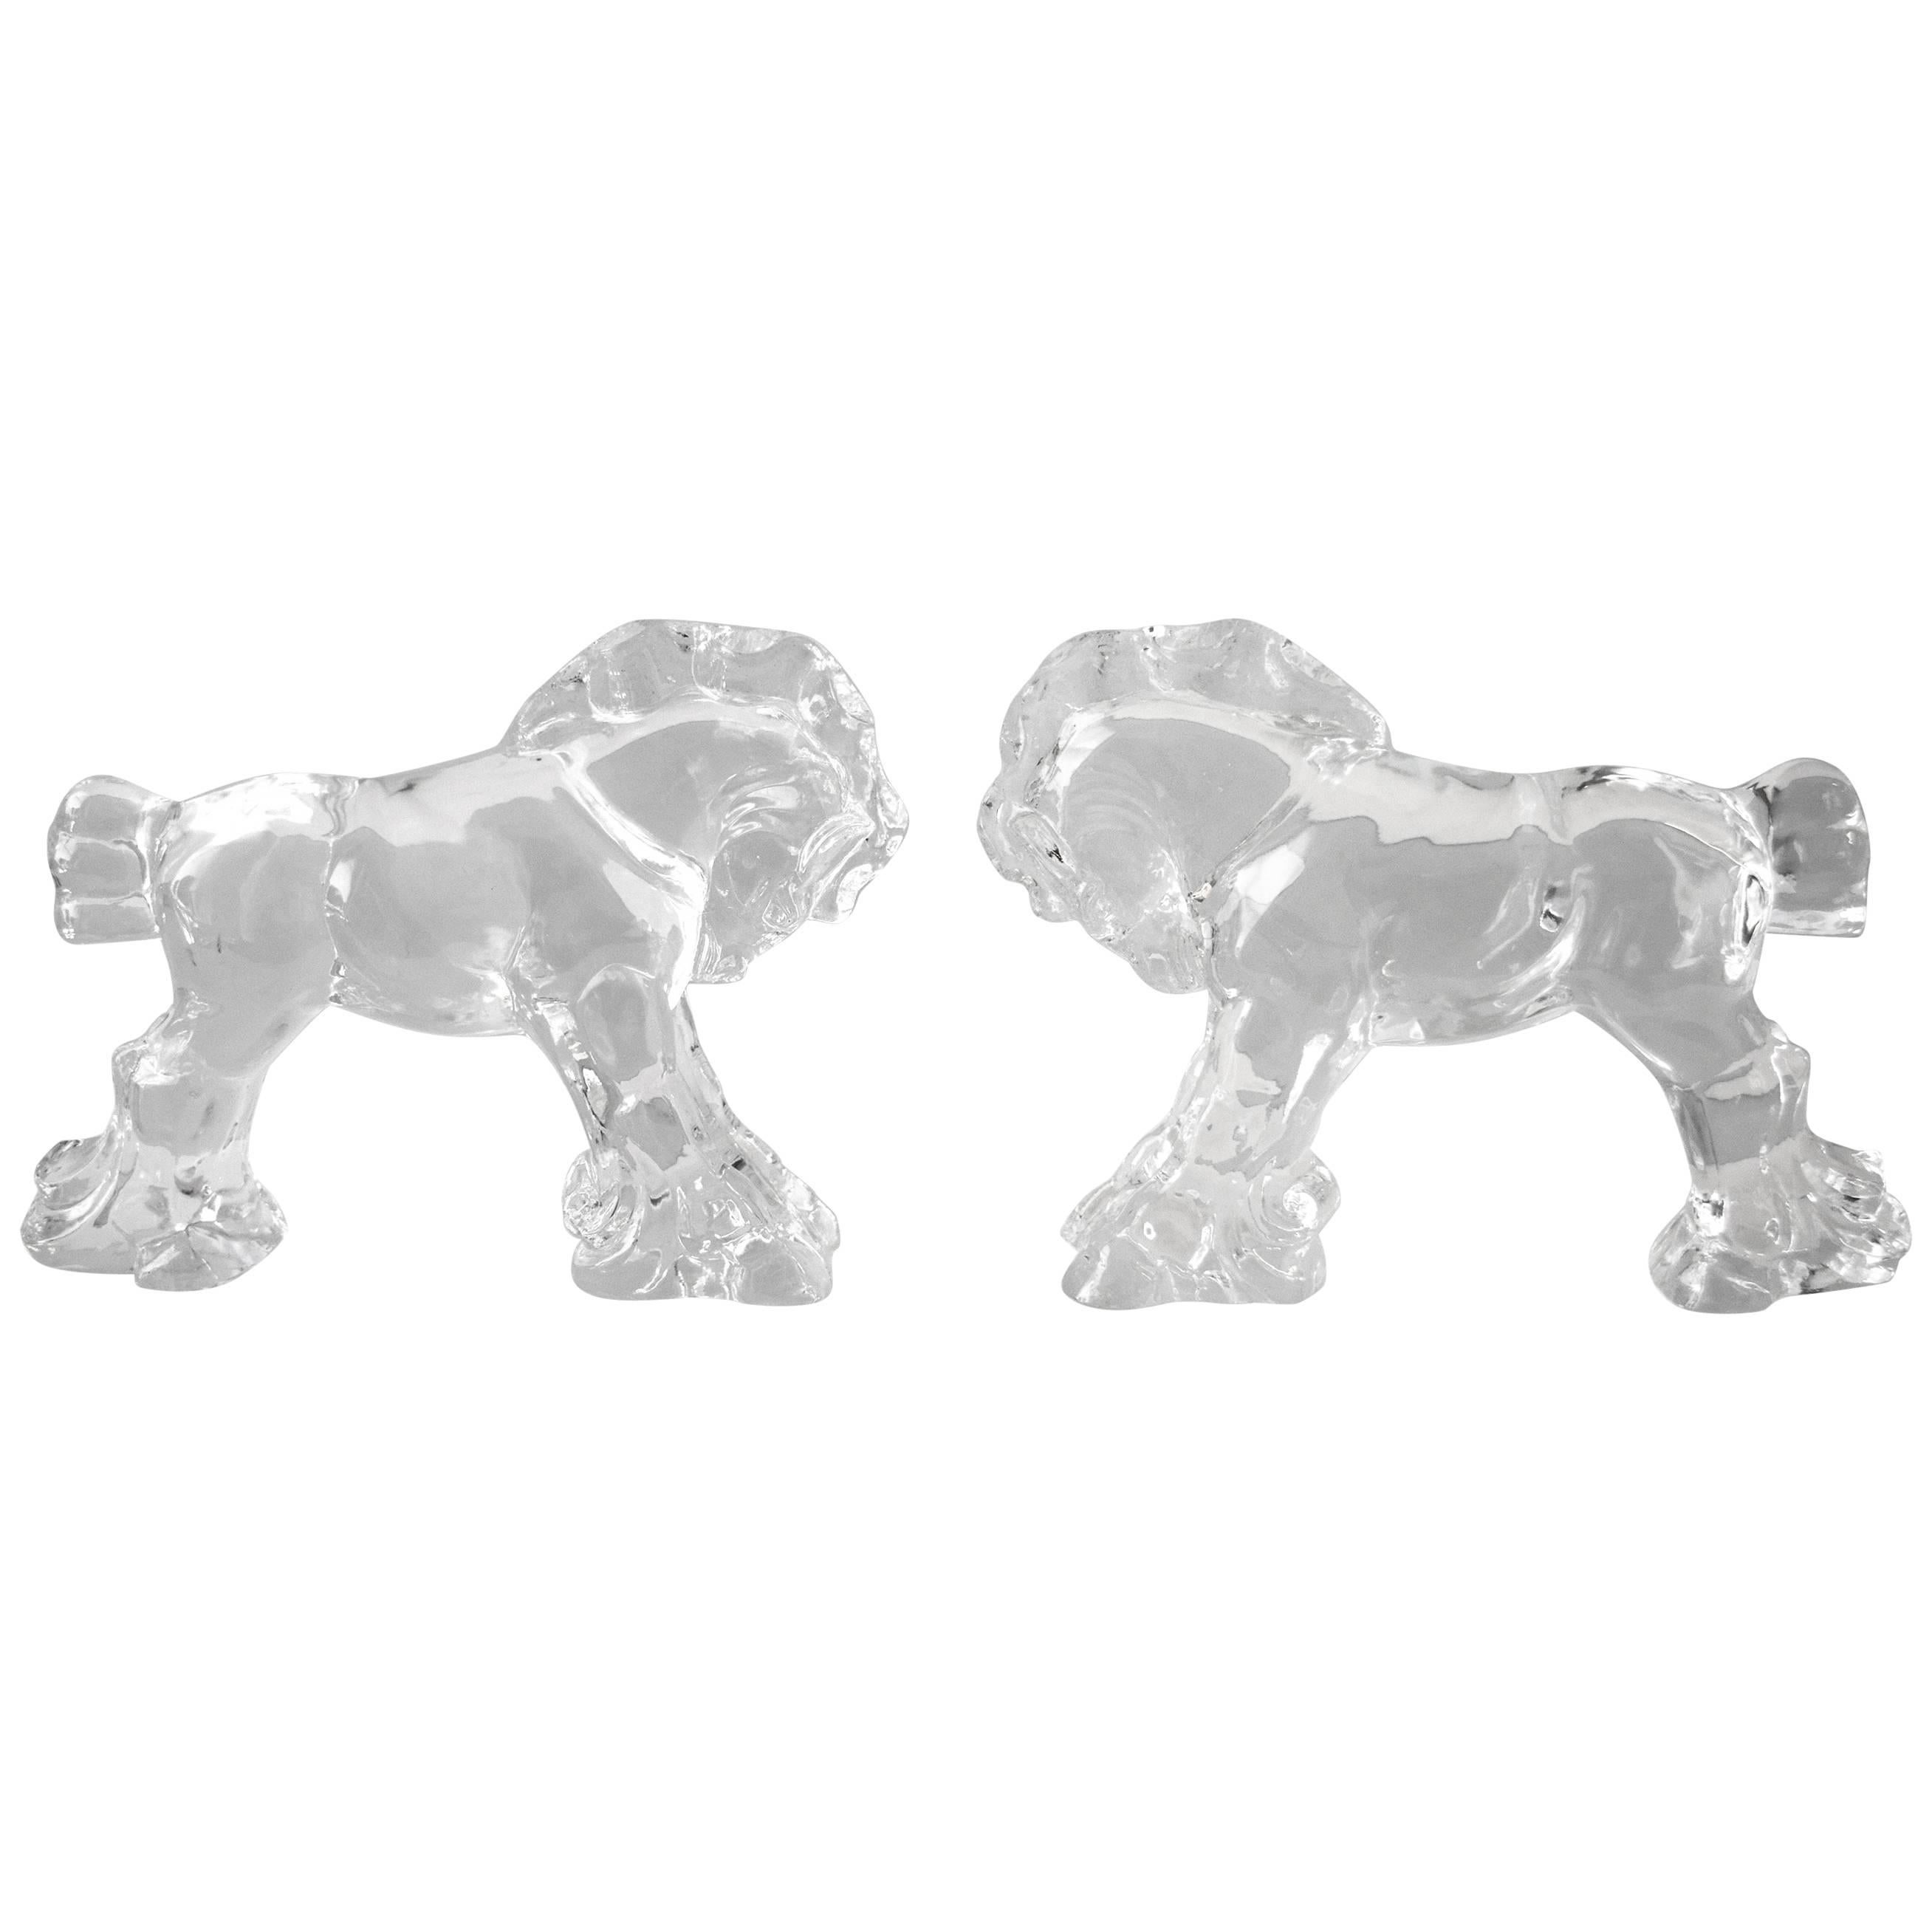 Pair of 1930s Steuben Glass Sculptures of Horses